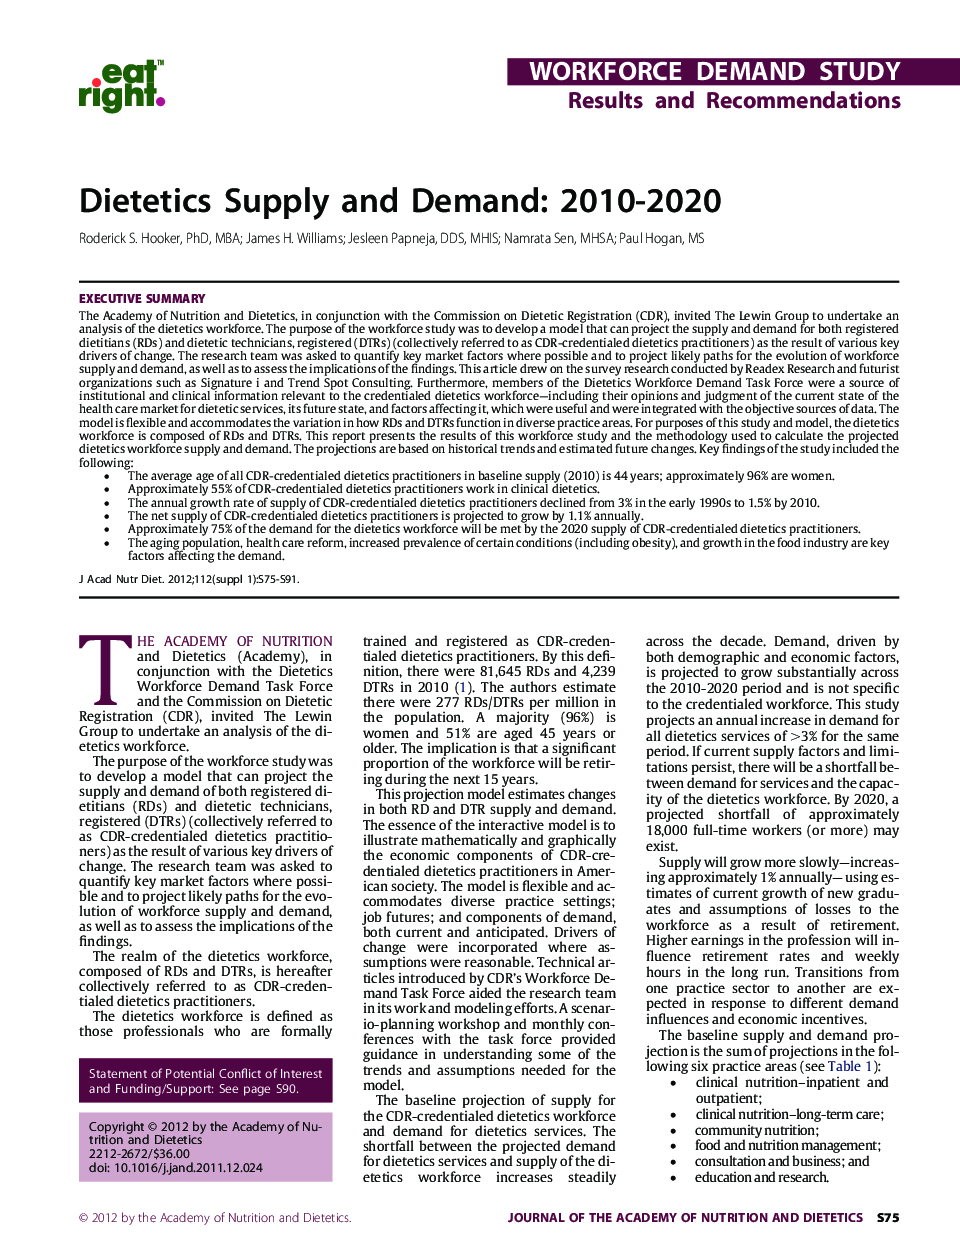 Dietetics Supply and Demand: 2010-2020 